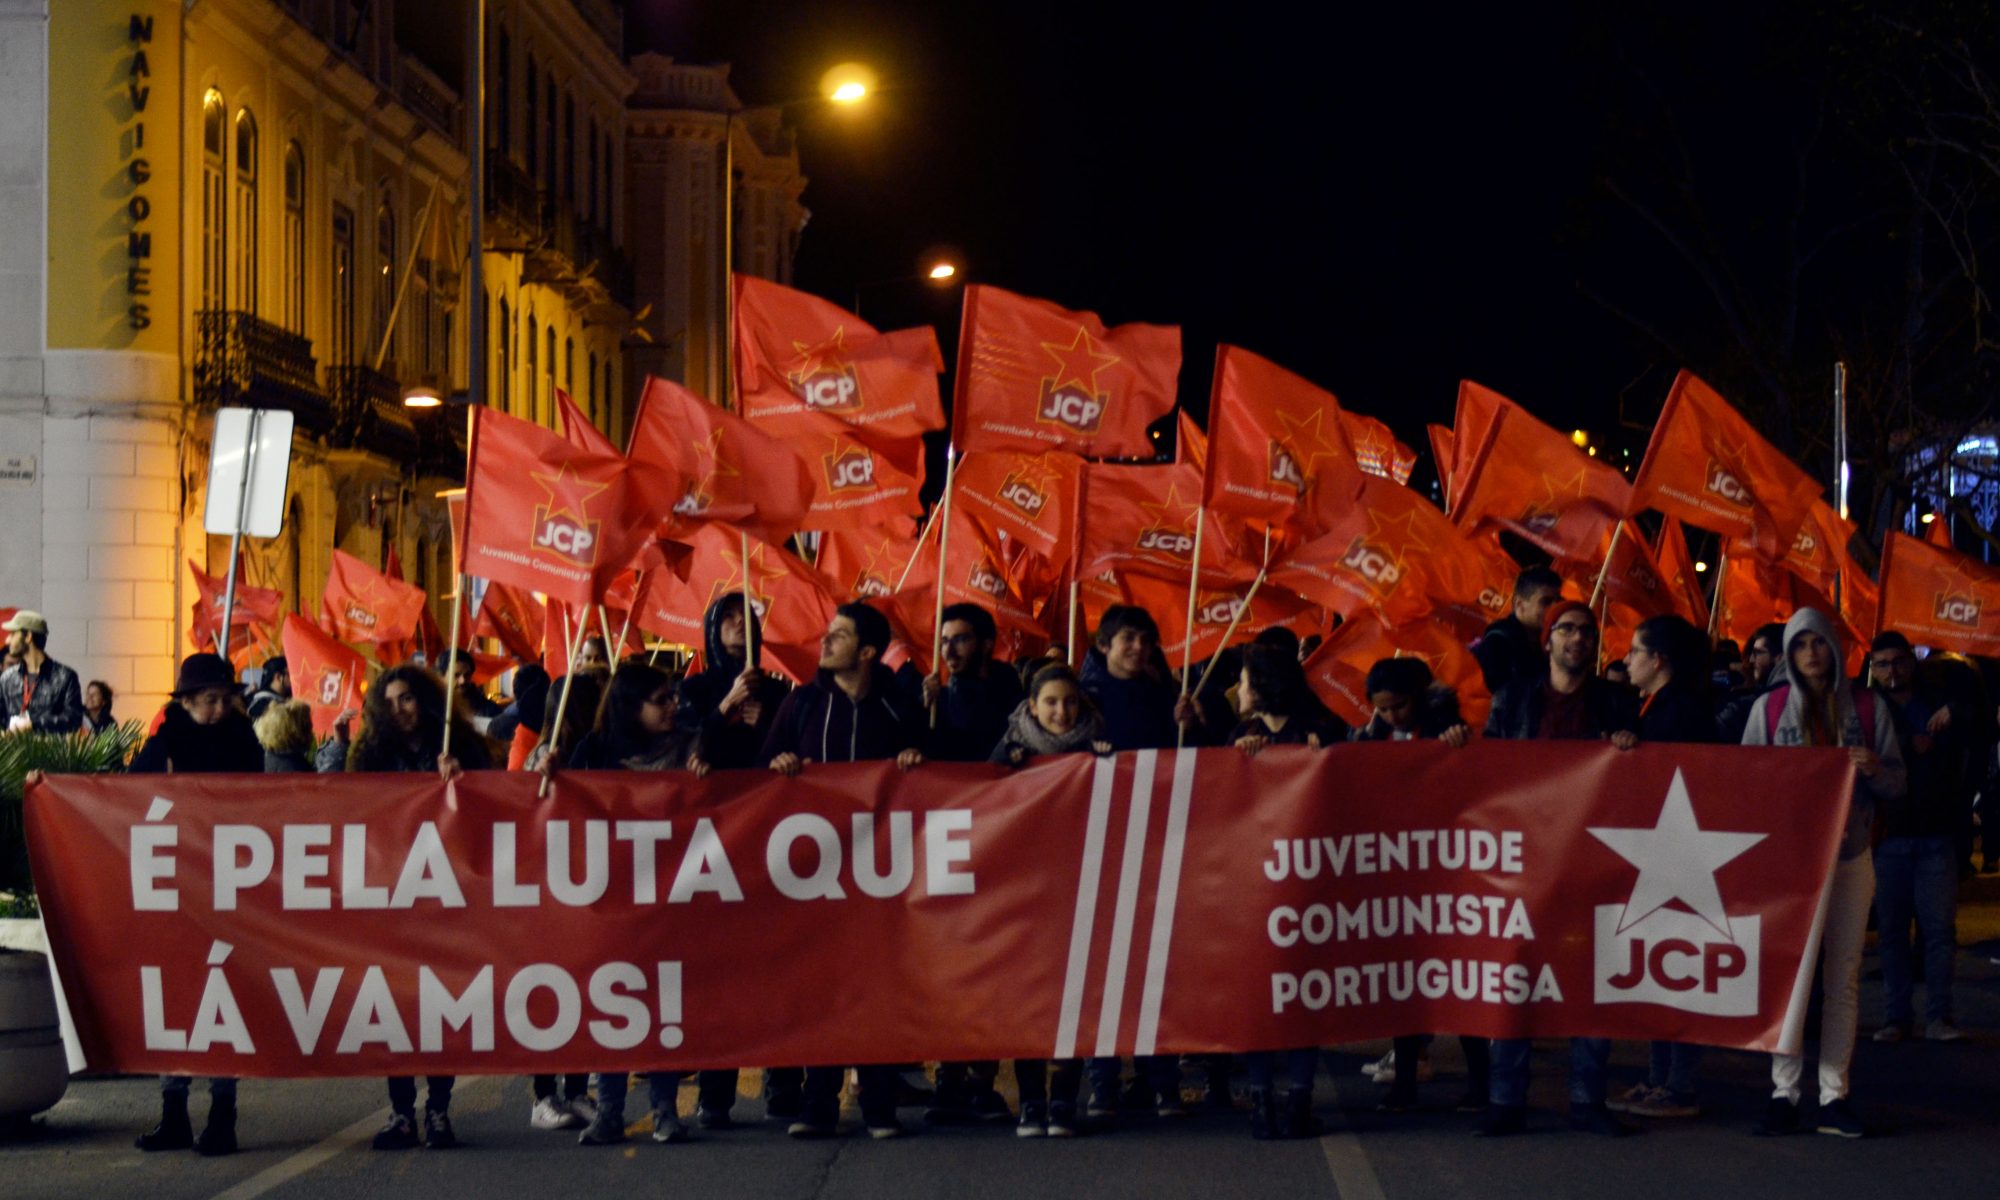              Juventude Comunista Portuguesa